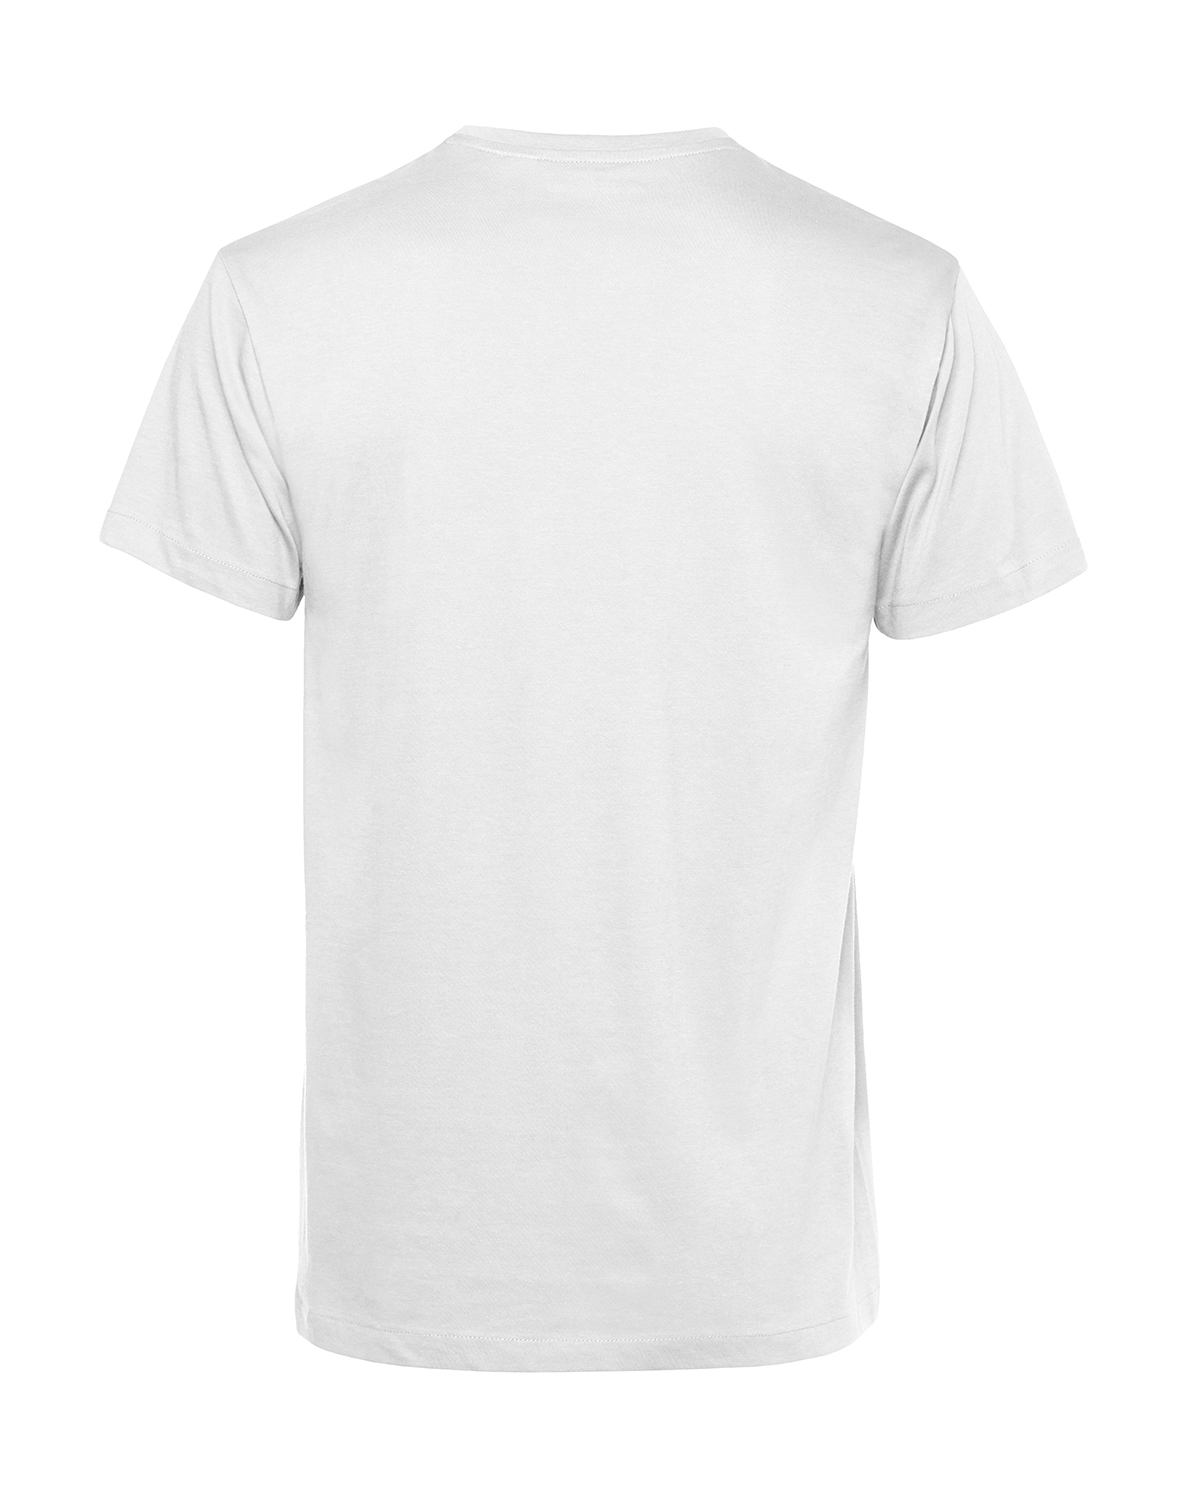 Unisex tričko Organic inspire Velikost: M, Barva: Bílá